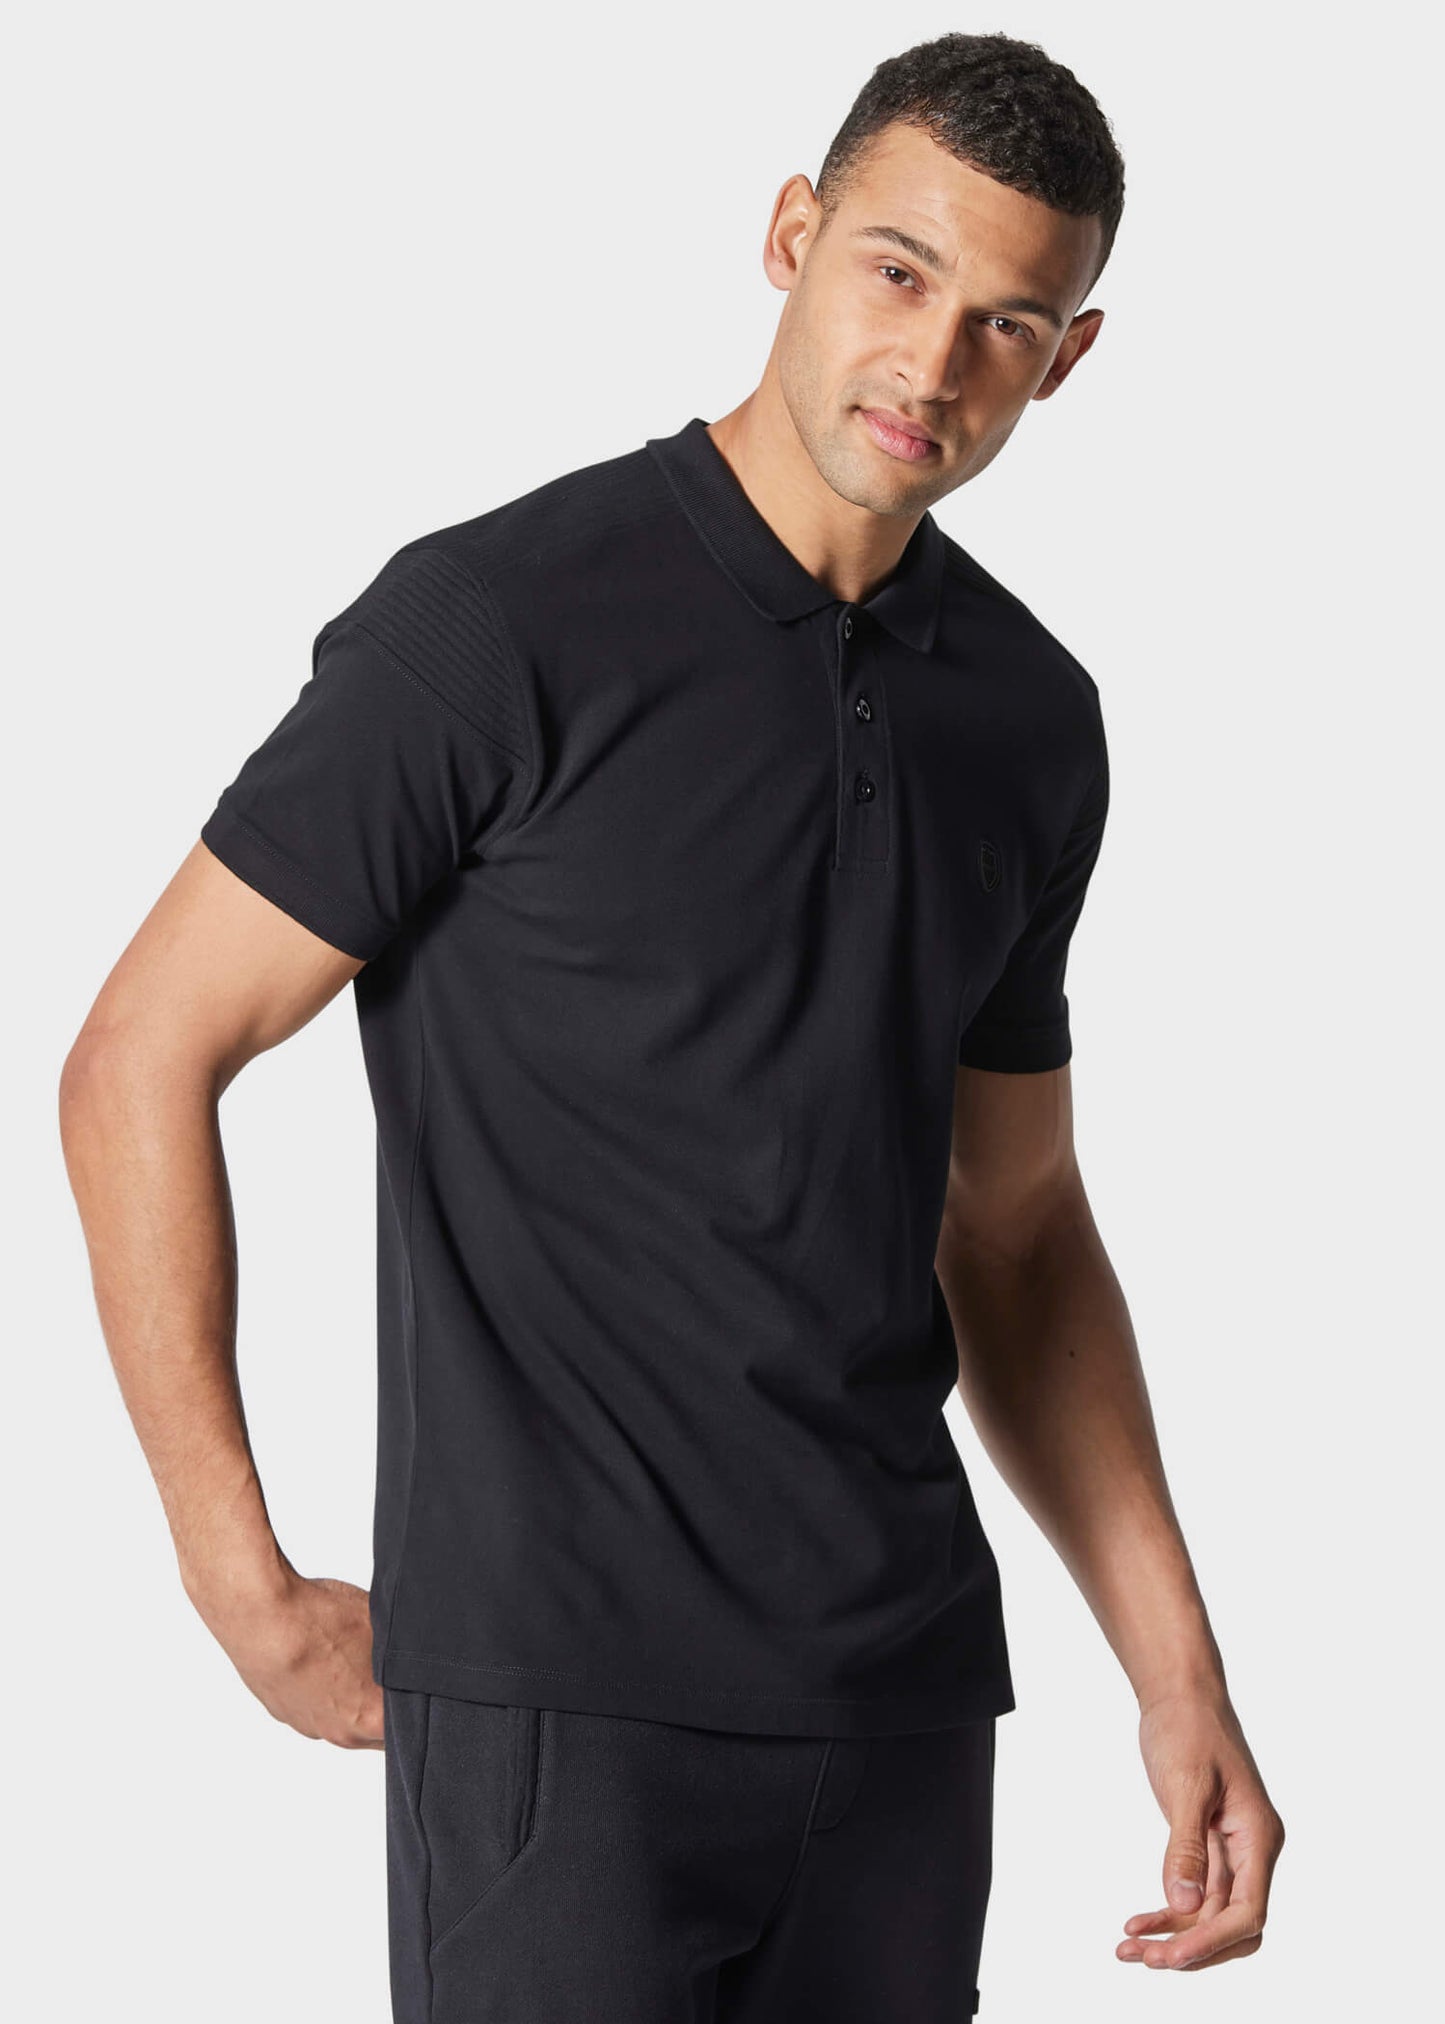 Orrac Black Polo Shirt